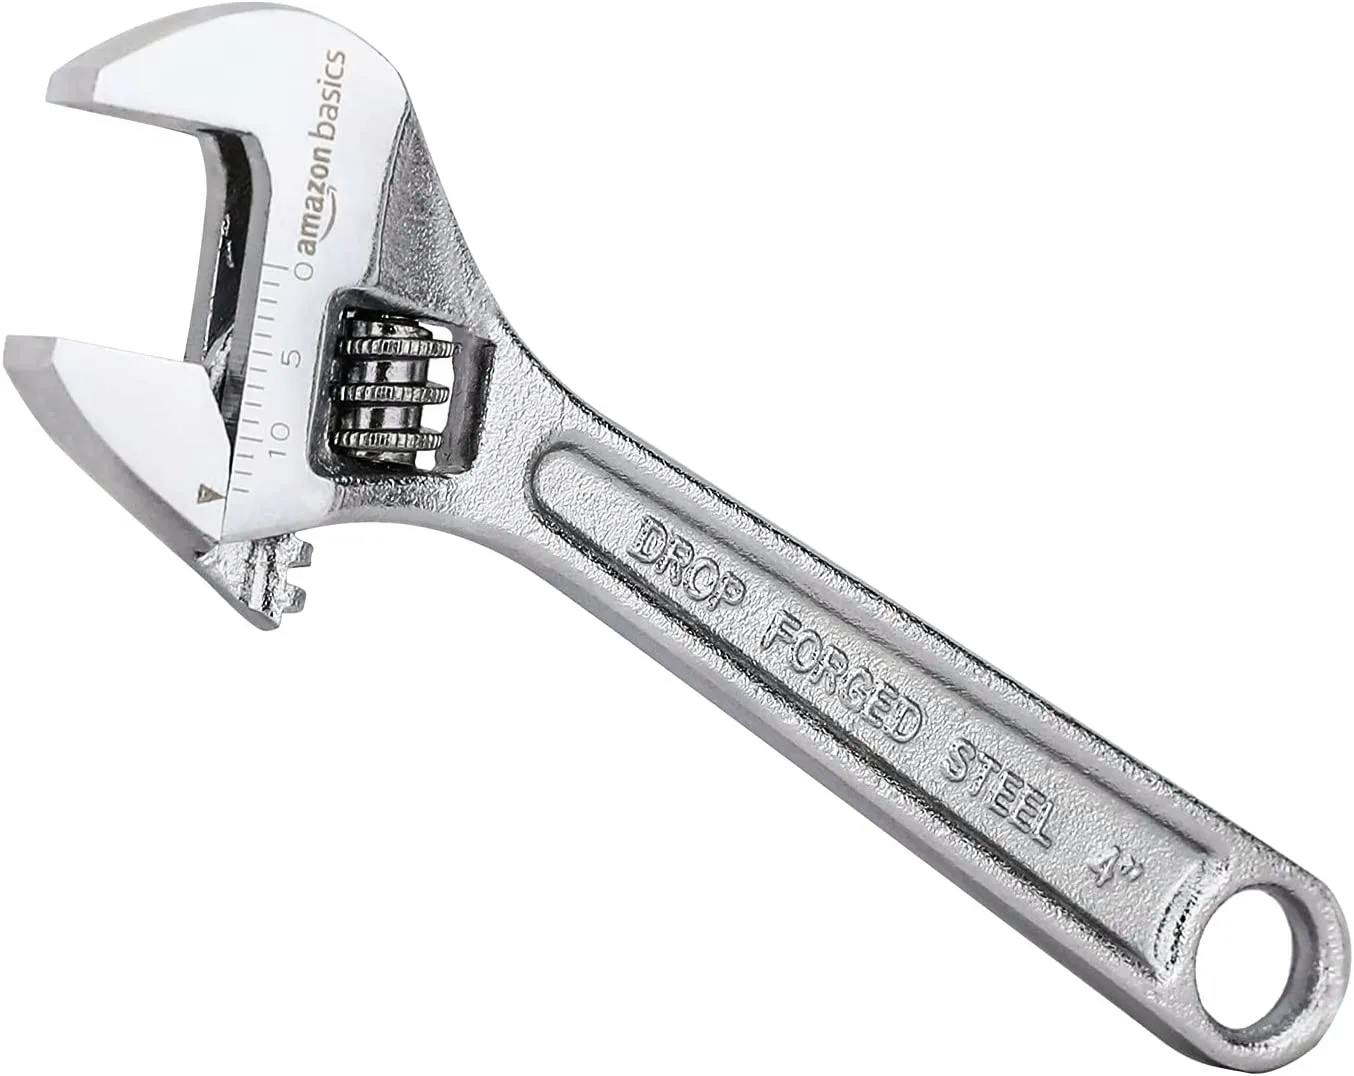 Amazon Basics Adjustable Wrench